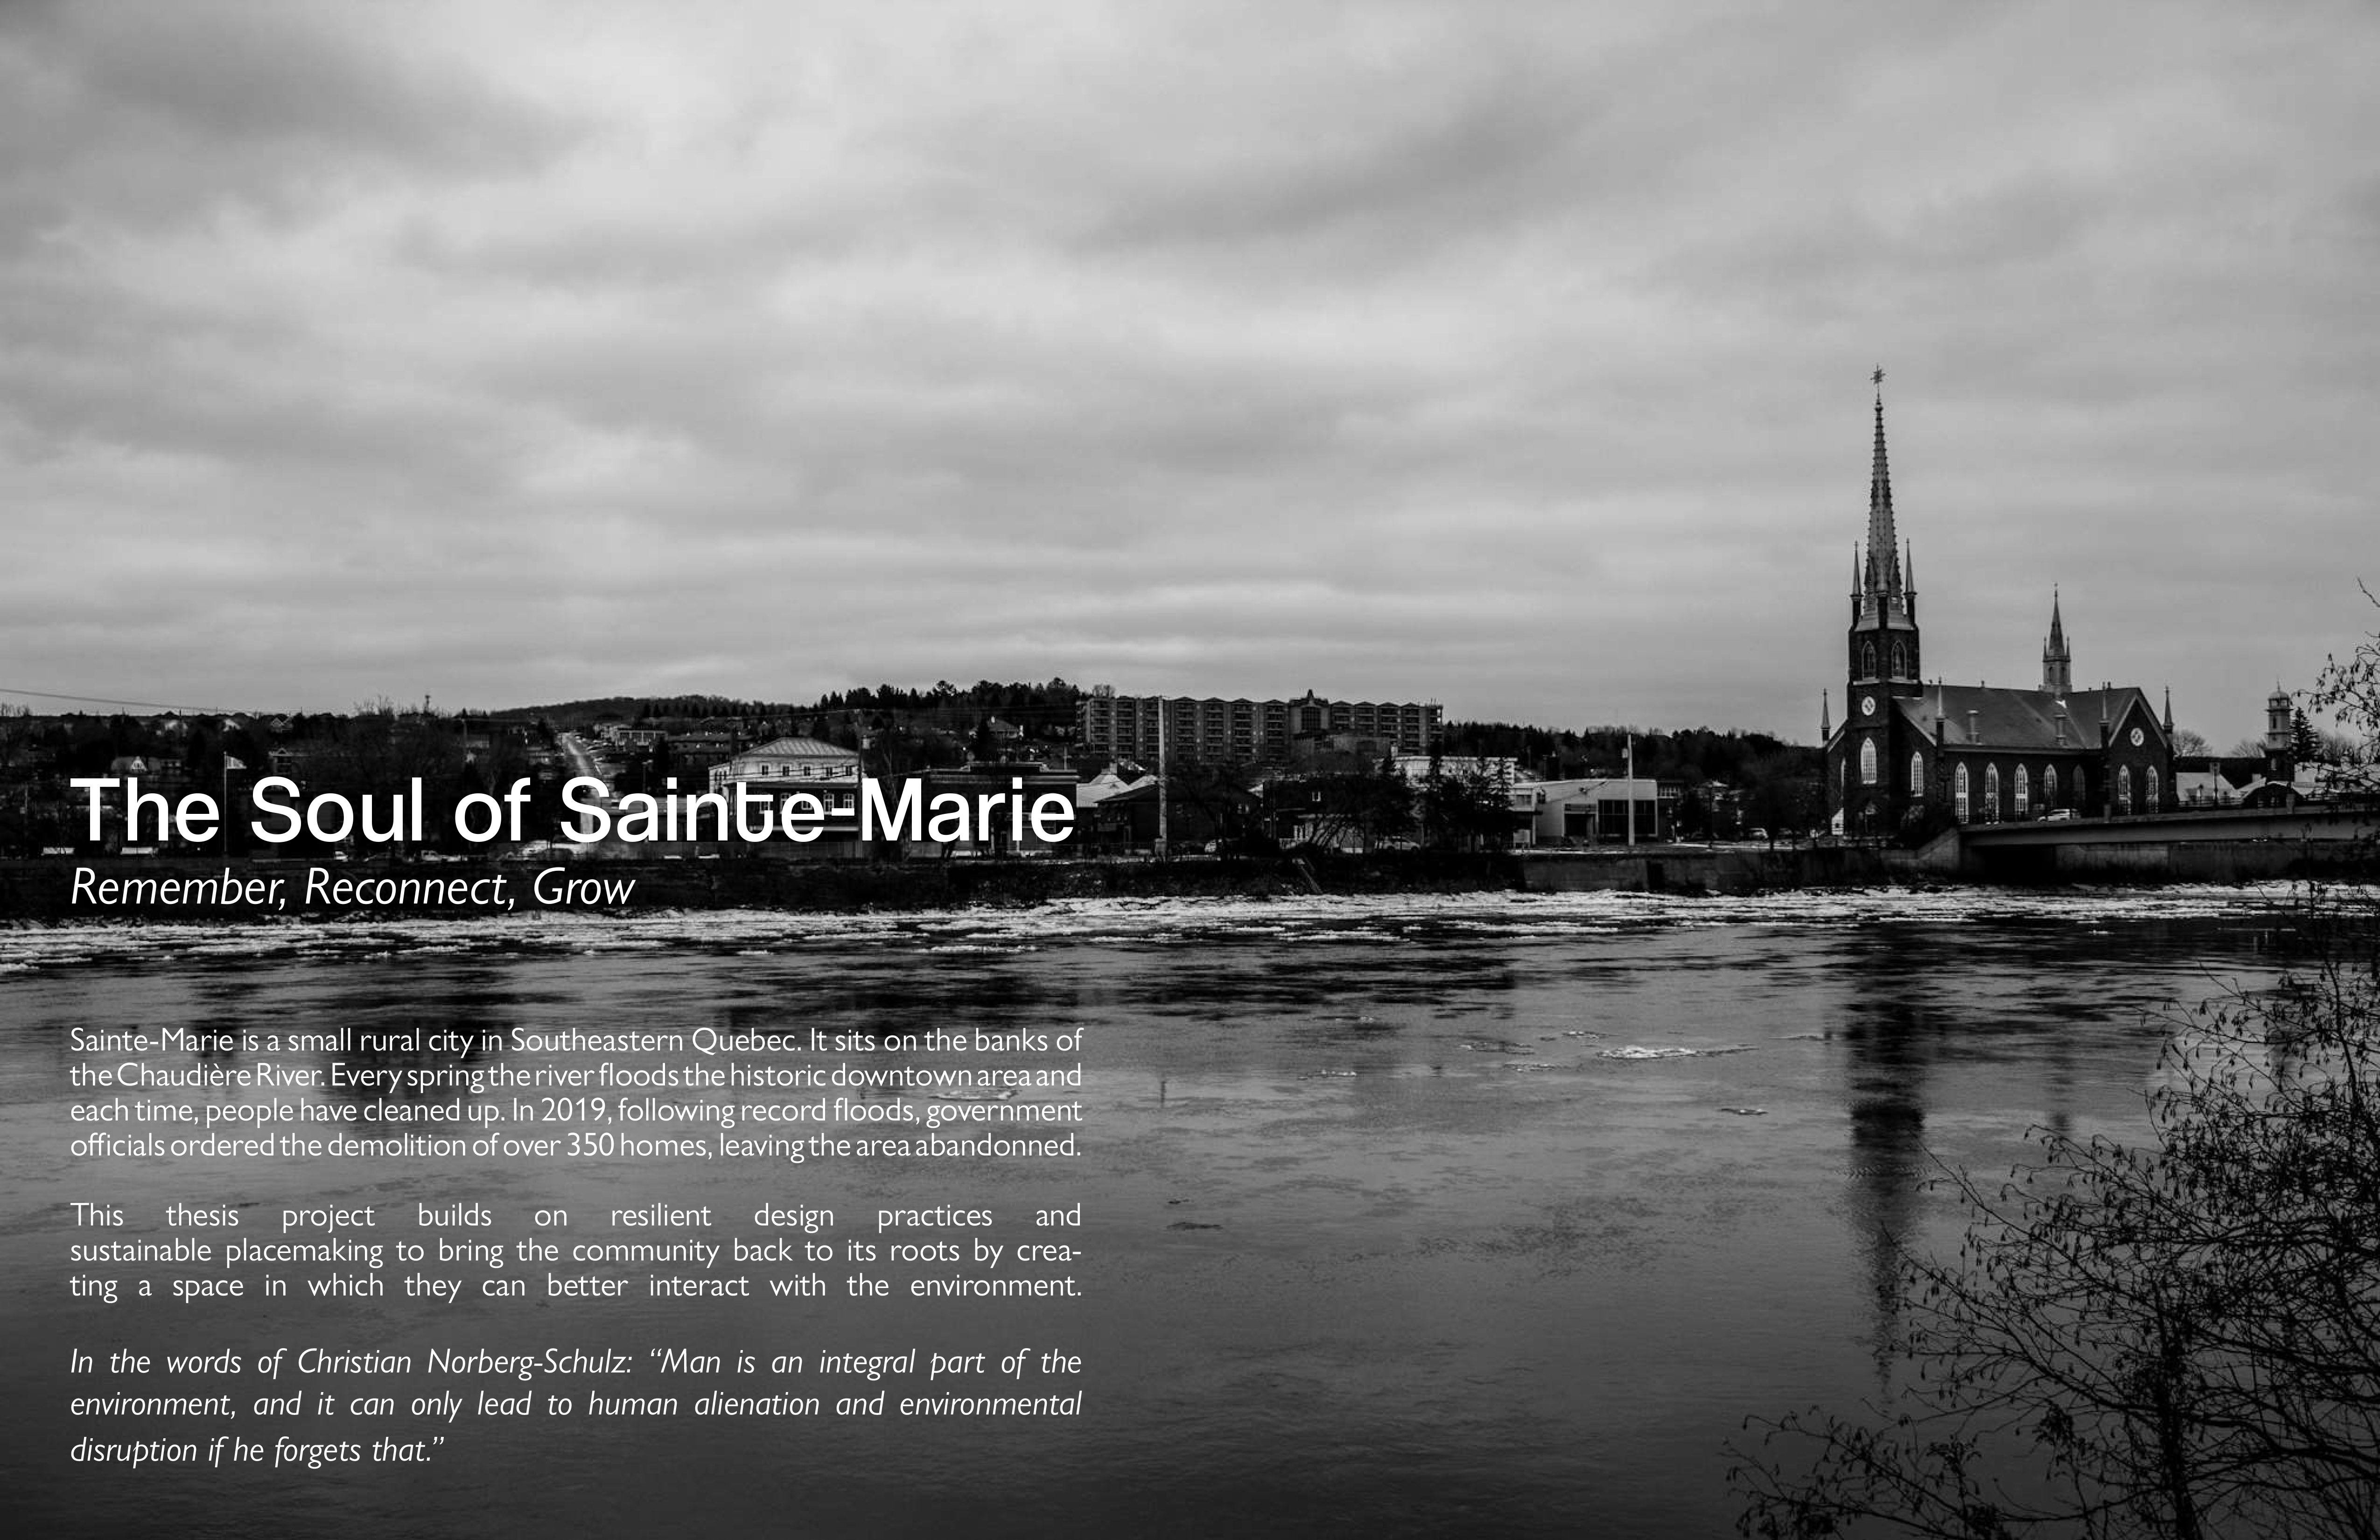 The Soul of Sainte-Marie